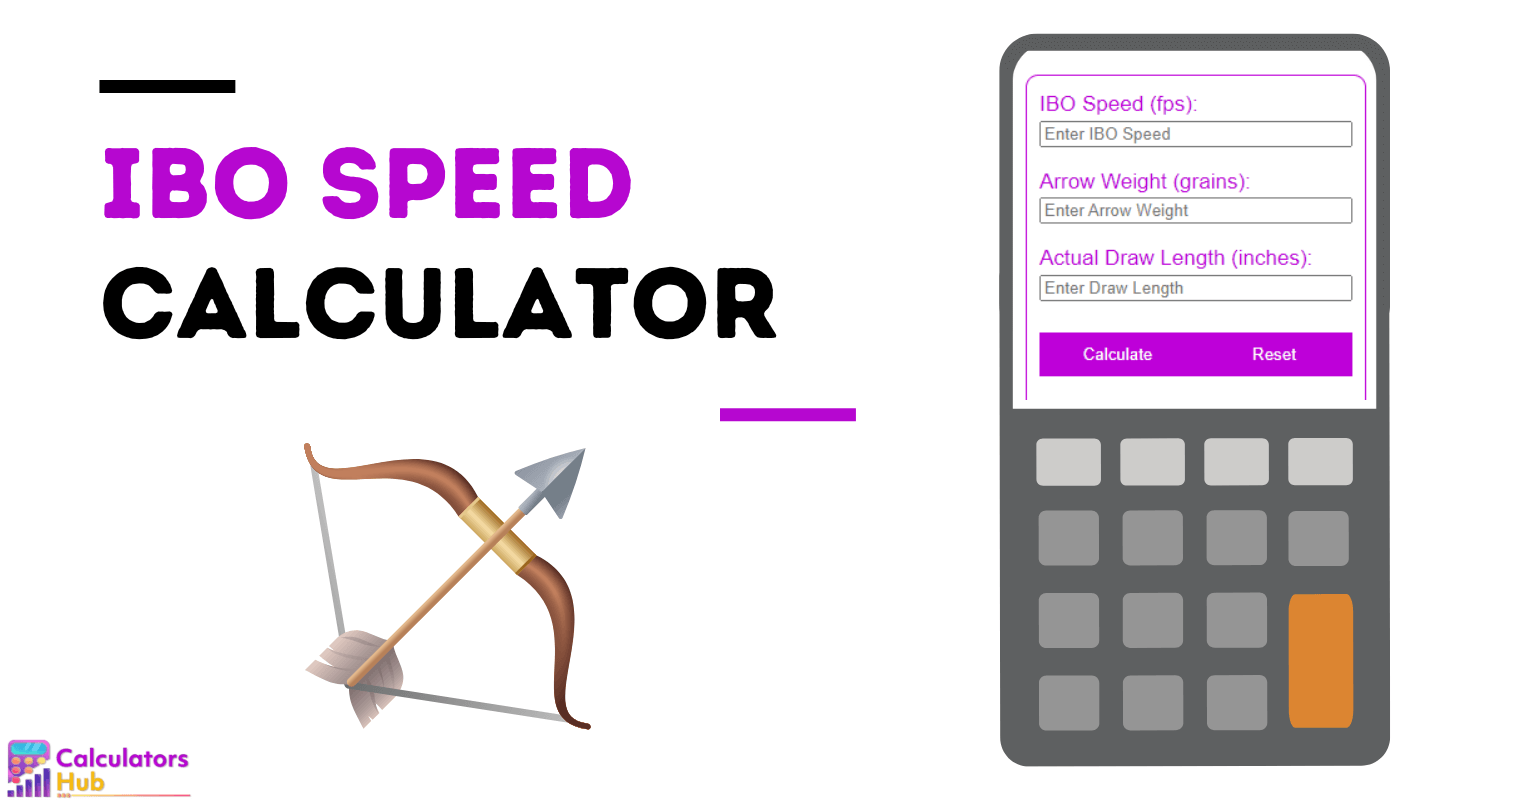 IBO Speed Calculator